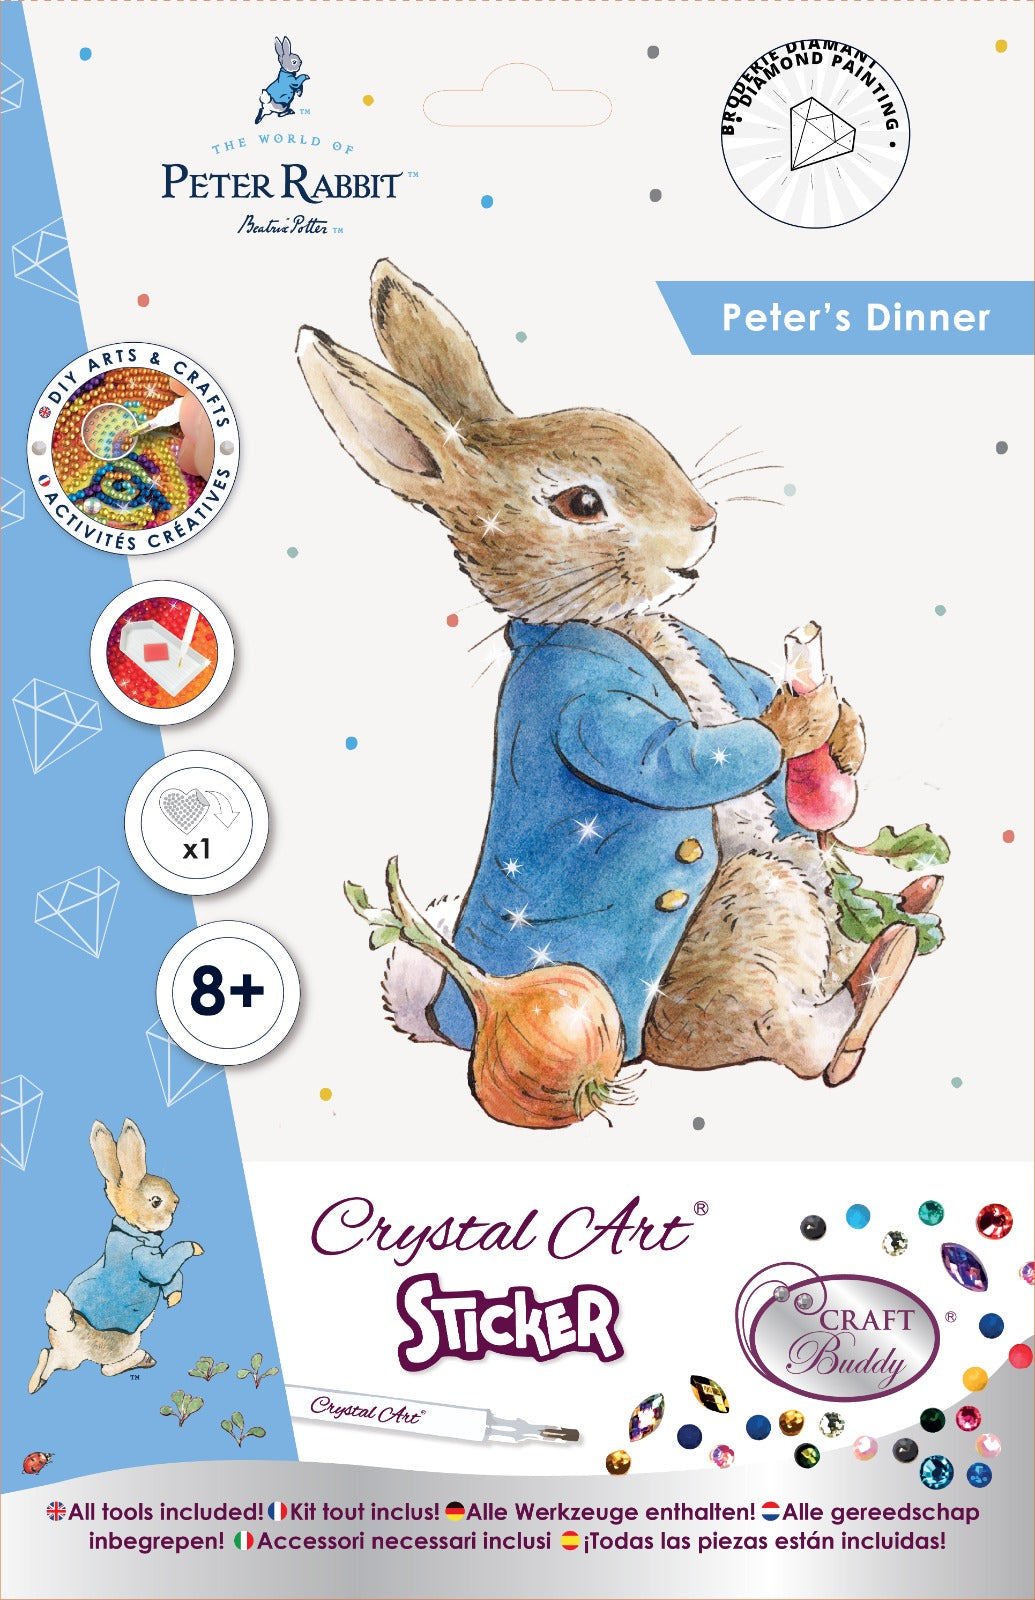 CAMK-PRBT02:Peter Rabbit Individual Sticker A5